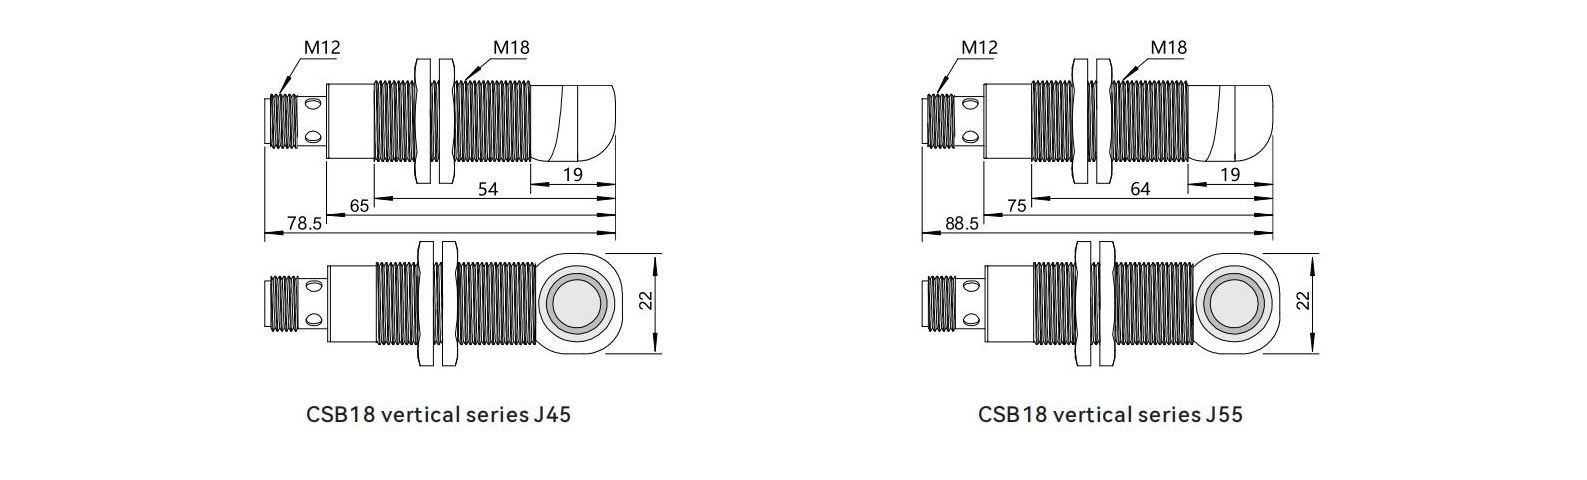 Dimensions of automotive ultrasonic sensor CSB18 elbow series